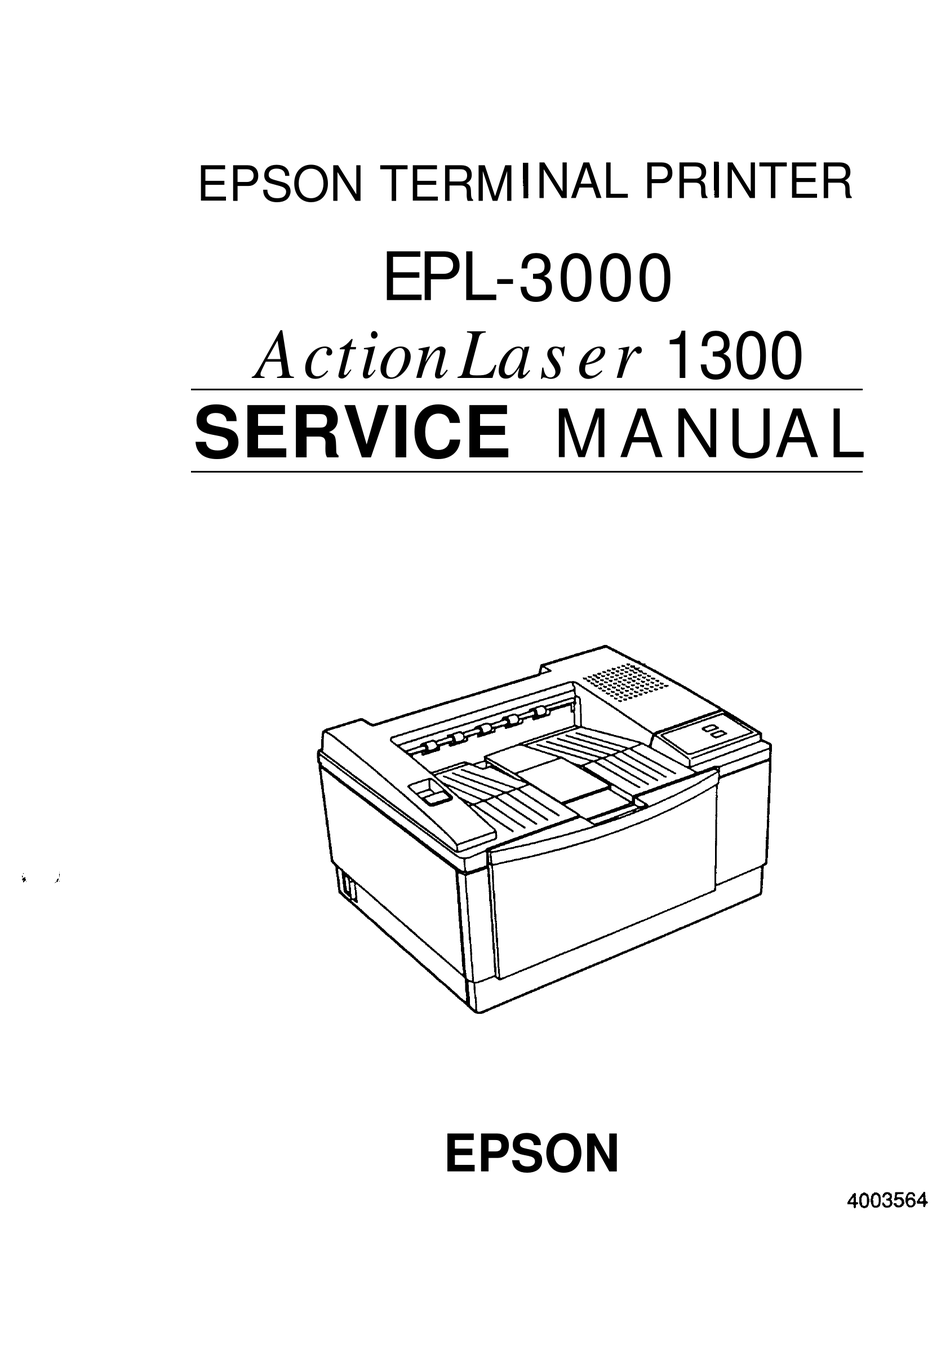 EPSON ACTIONLASER 1300 EPL-3000 SERVICE MANUAL Pdf Download | ManualsLib